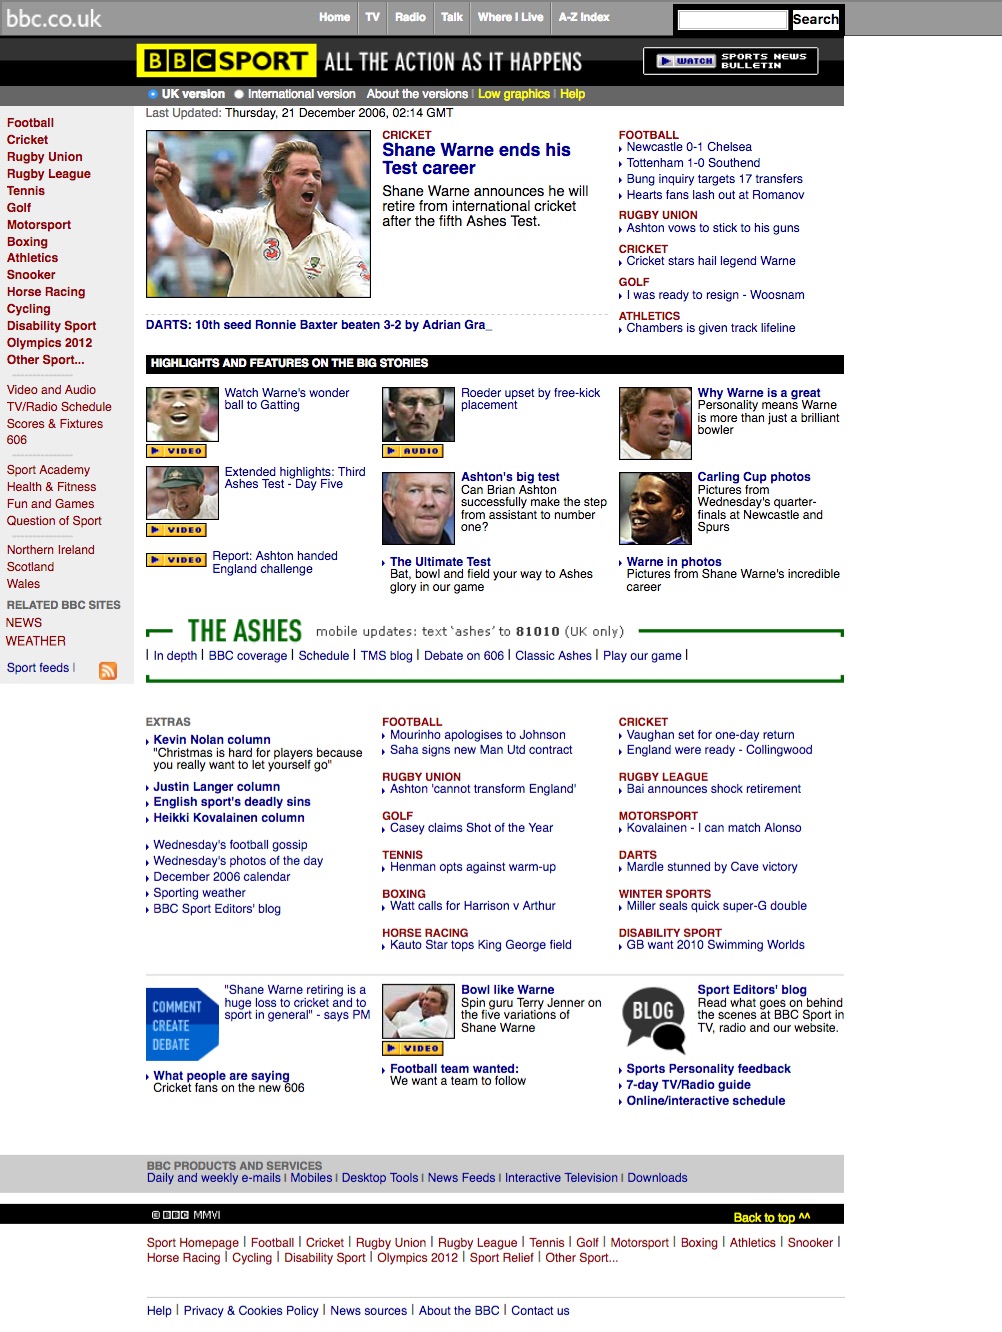 BBC.co.uk sports homepage (2006)